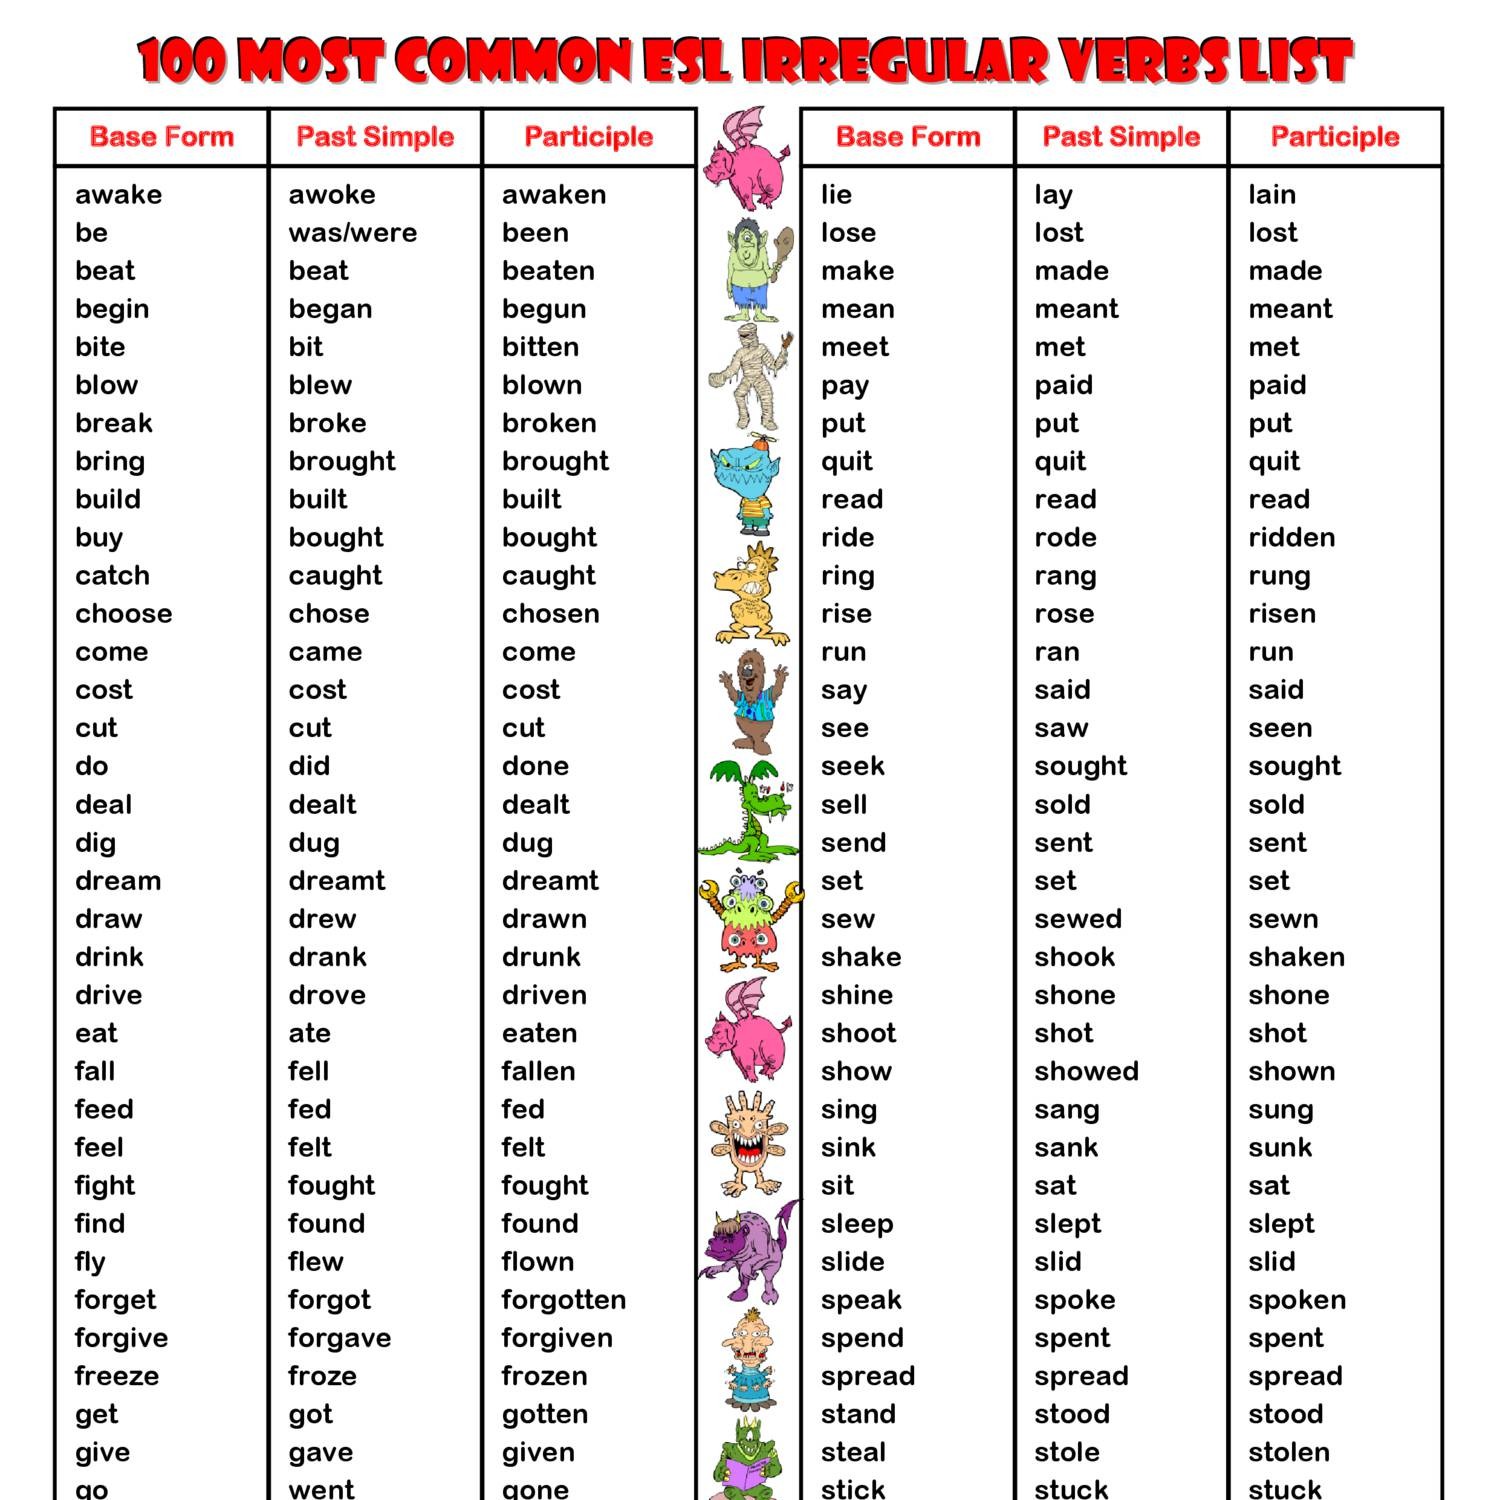 american english irregular verbs list pdf